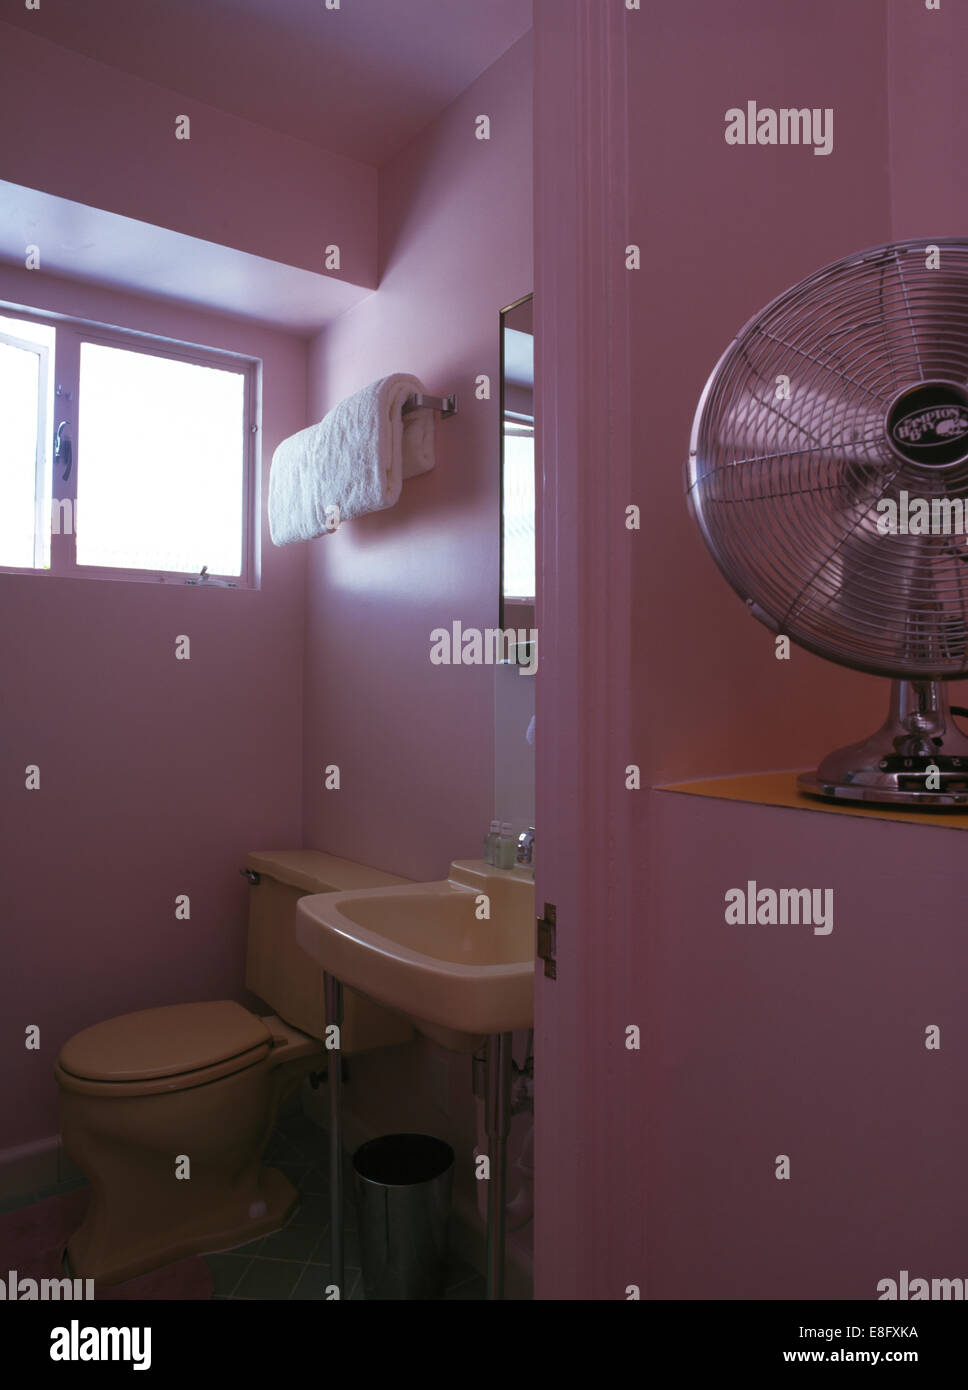 Freestanding electric fan on shelf in pink fifties style bathroom Stock Photo